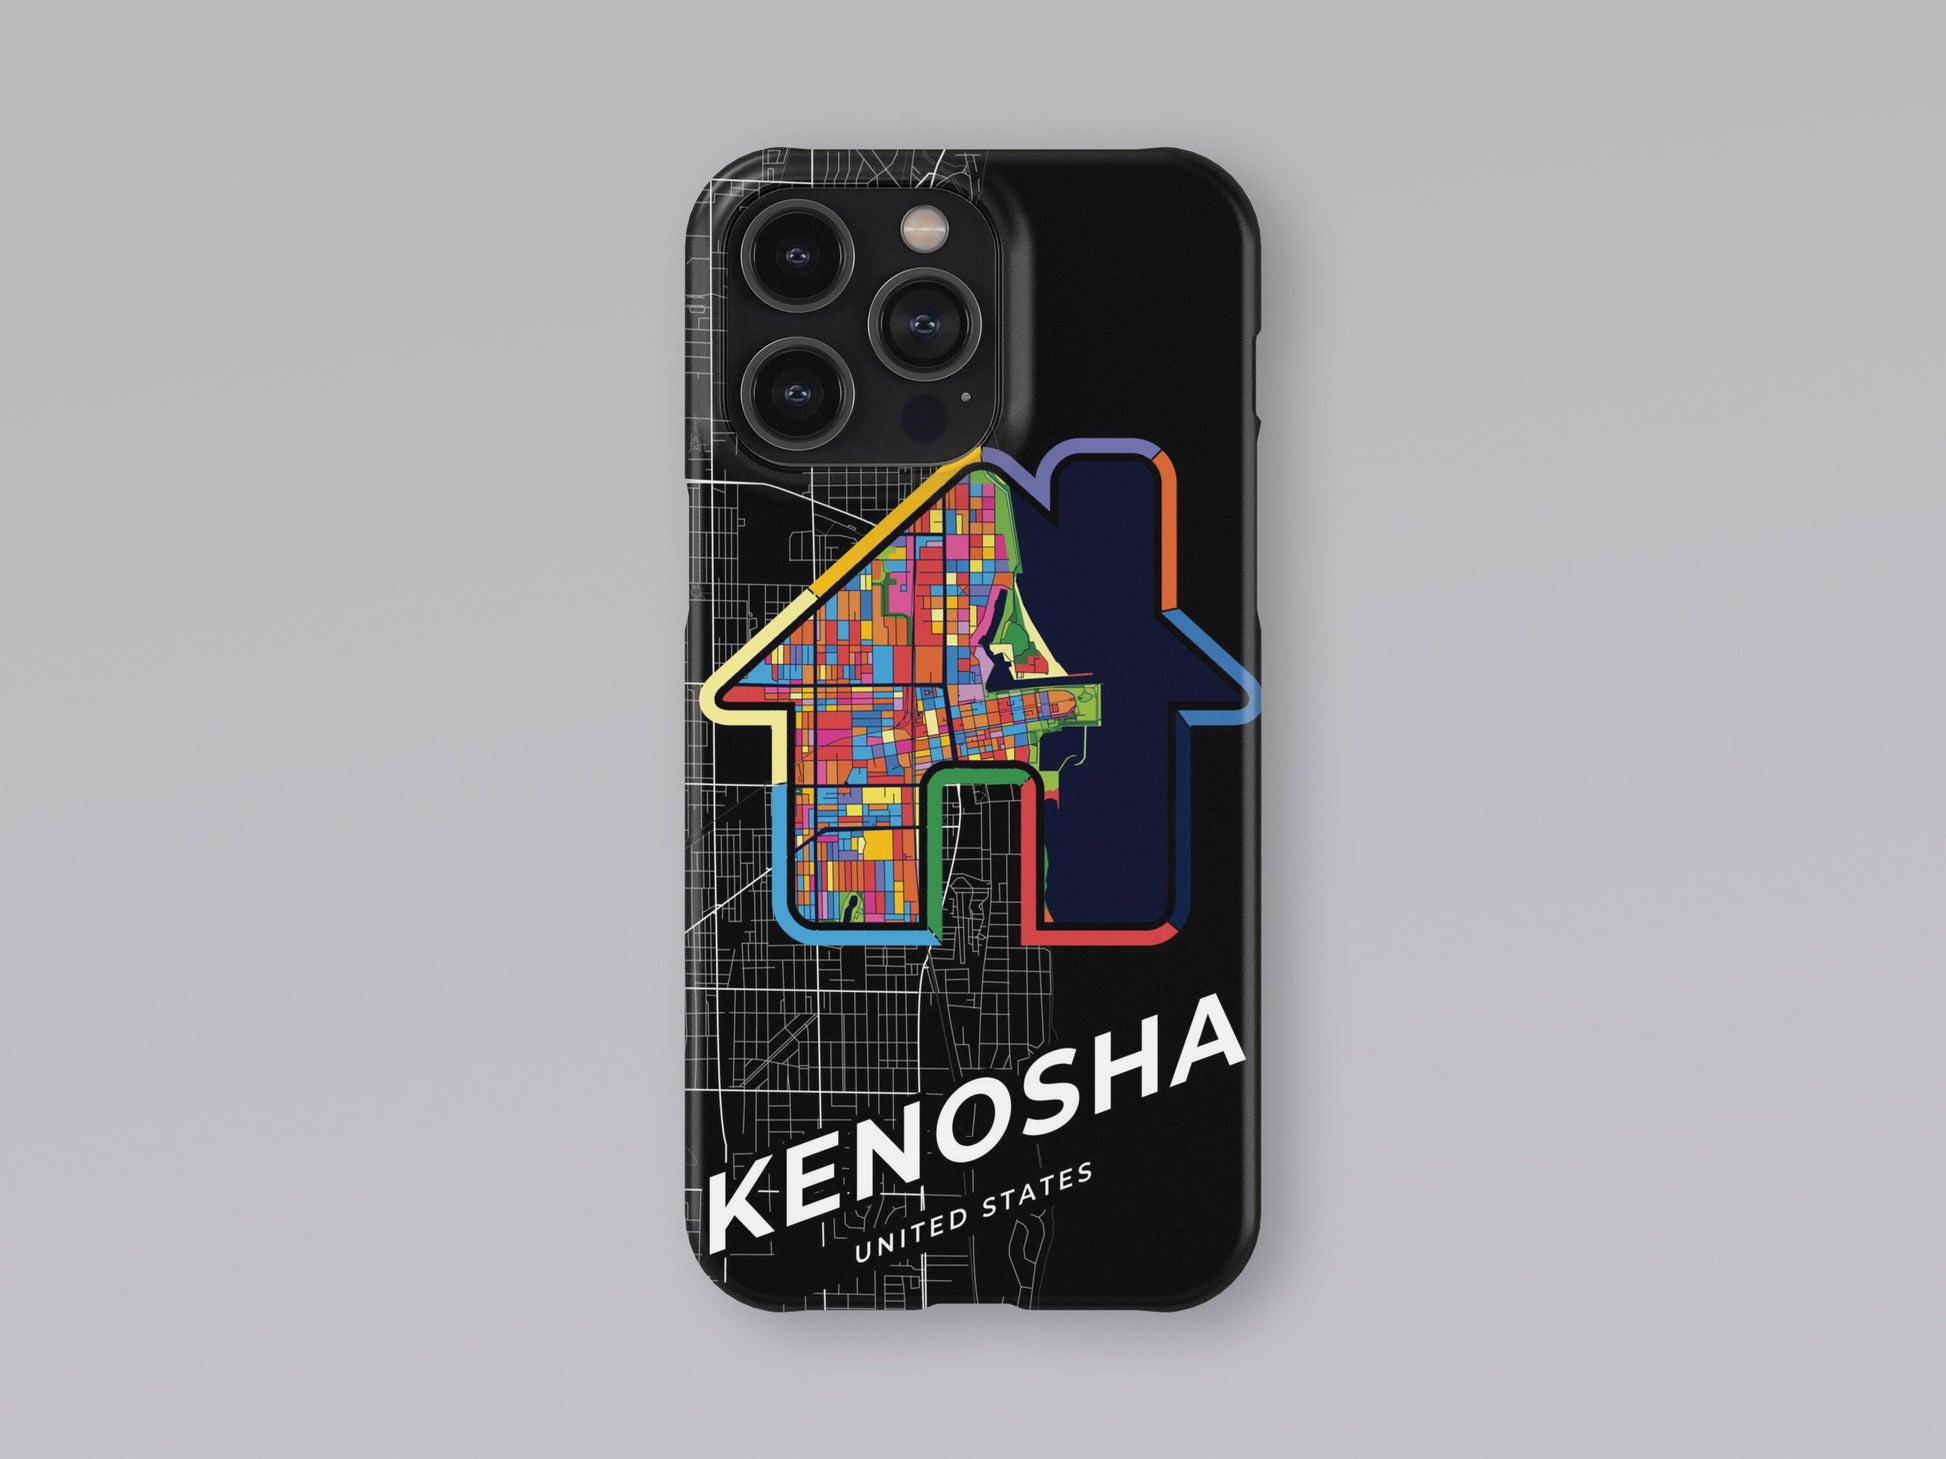 Kenosha Wisconsin slim phone case with colorful icon. Birthday, wedding or housewarming gift. Couple match cases. 3